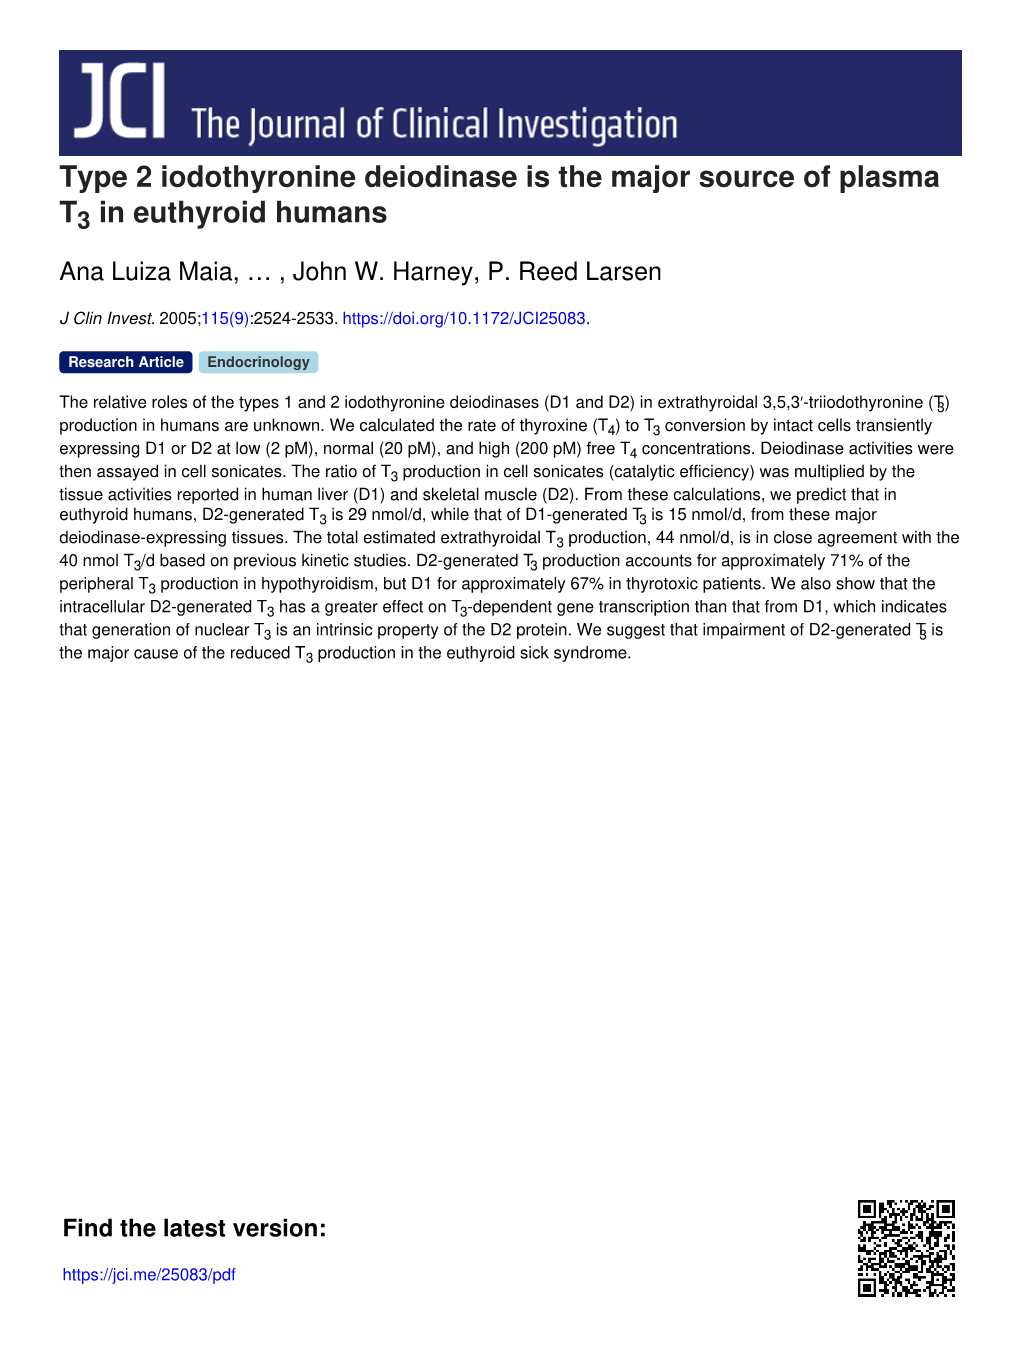 Type 2 Iodothyronine Deiodinase Is the Major Source of Plasma T3 in Euthyroid Humans